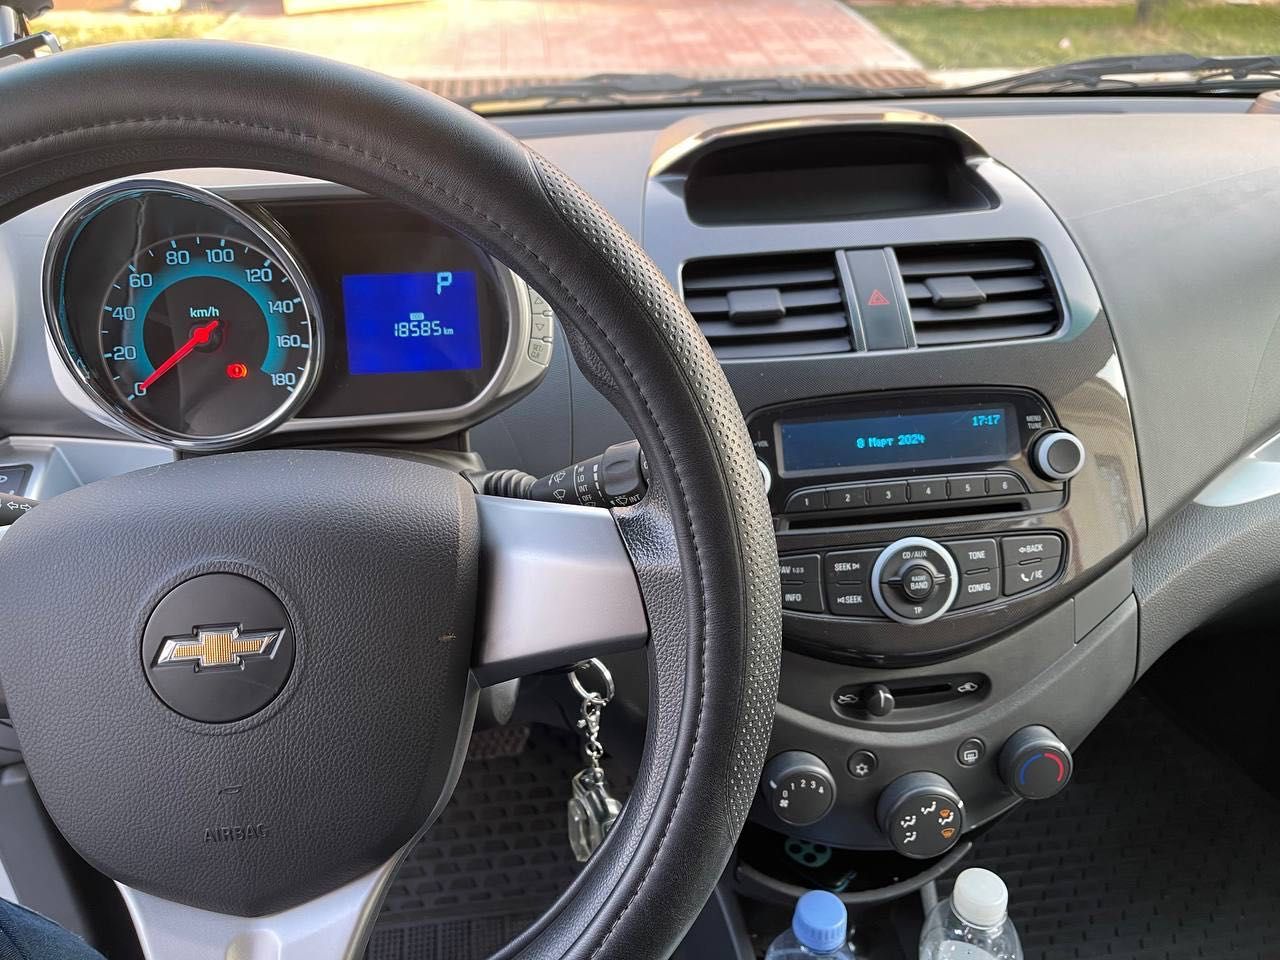 Продается Chevrolet spark 2019 года фулл, цвет белый, пробег 18500